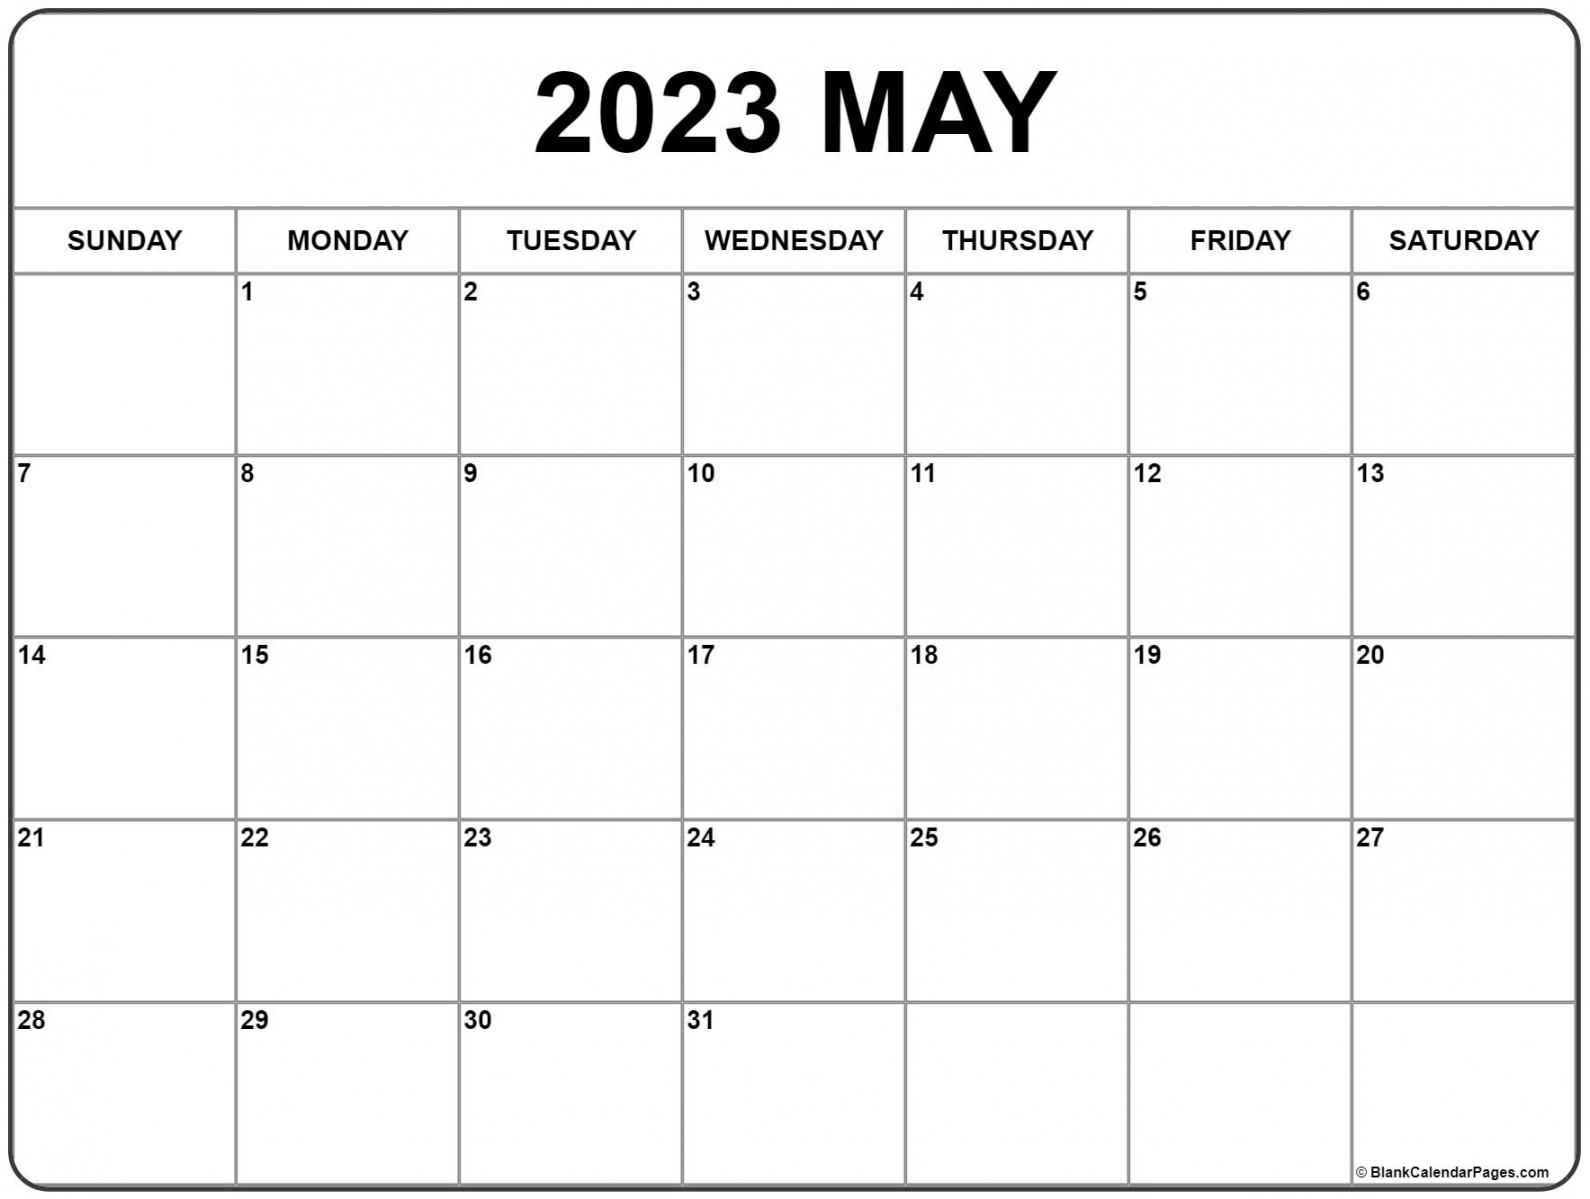 May  calendar  free printable calendar - FREE Printables - Free Printable May 2023 Calendar